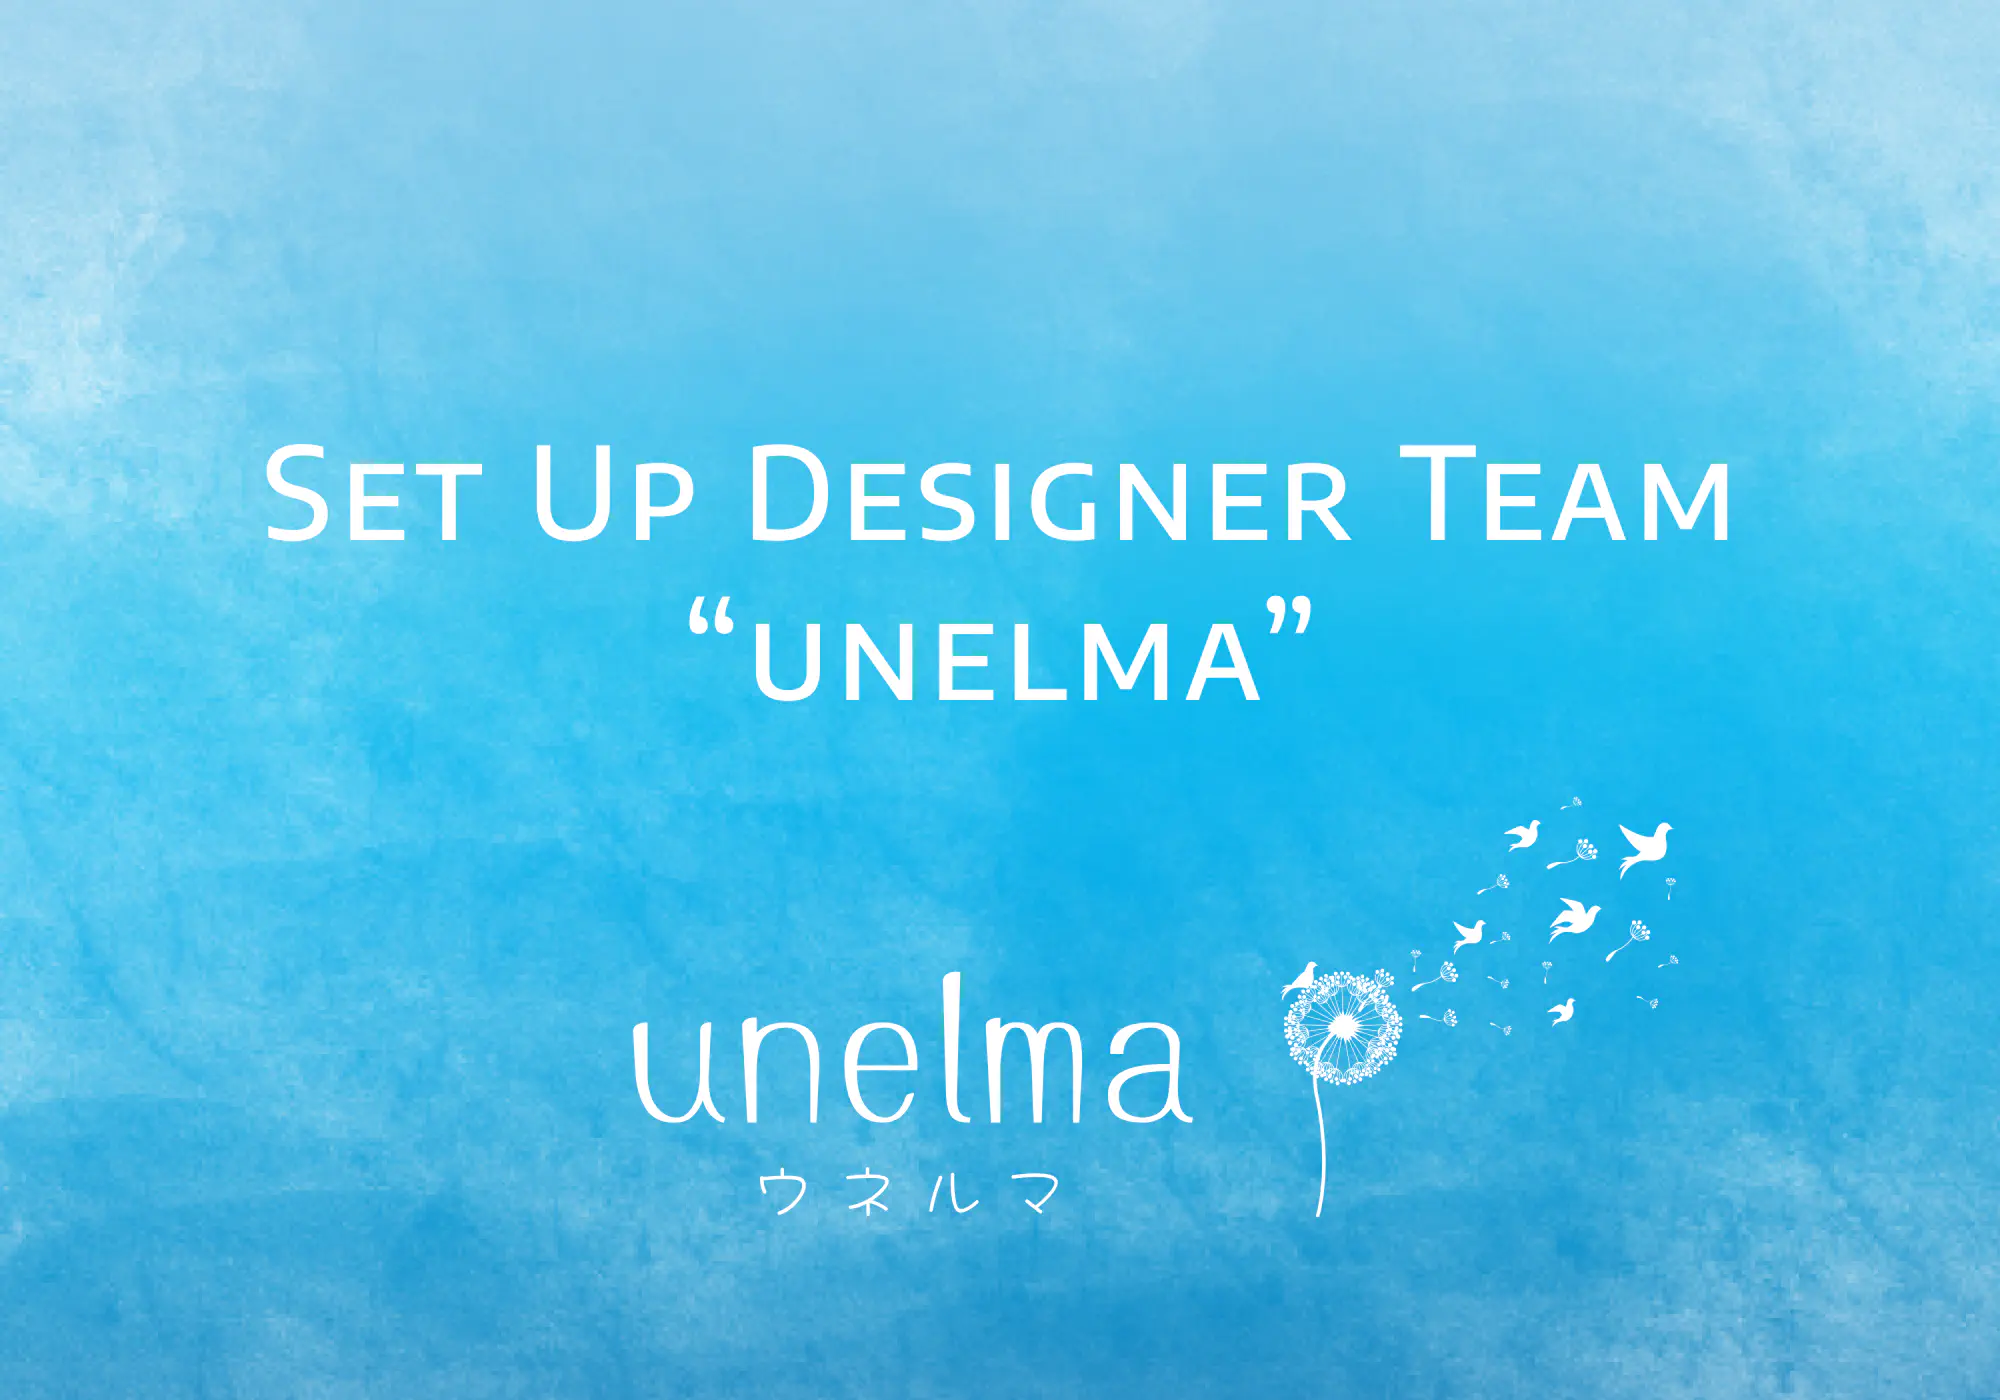 Set up designer team unelma